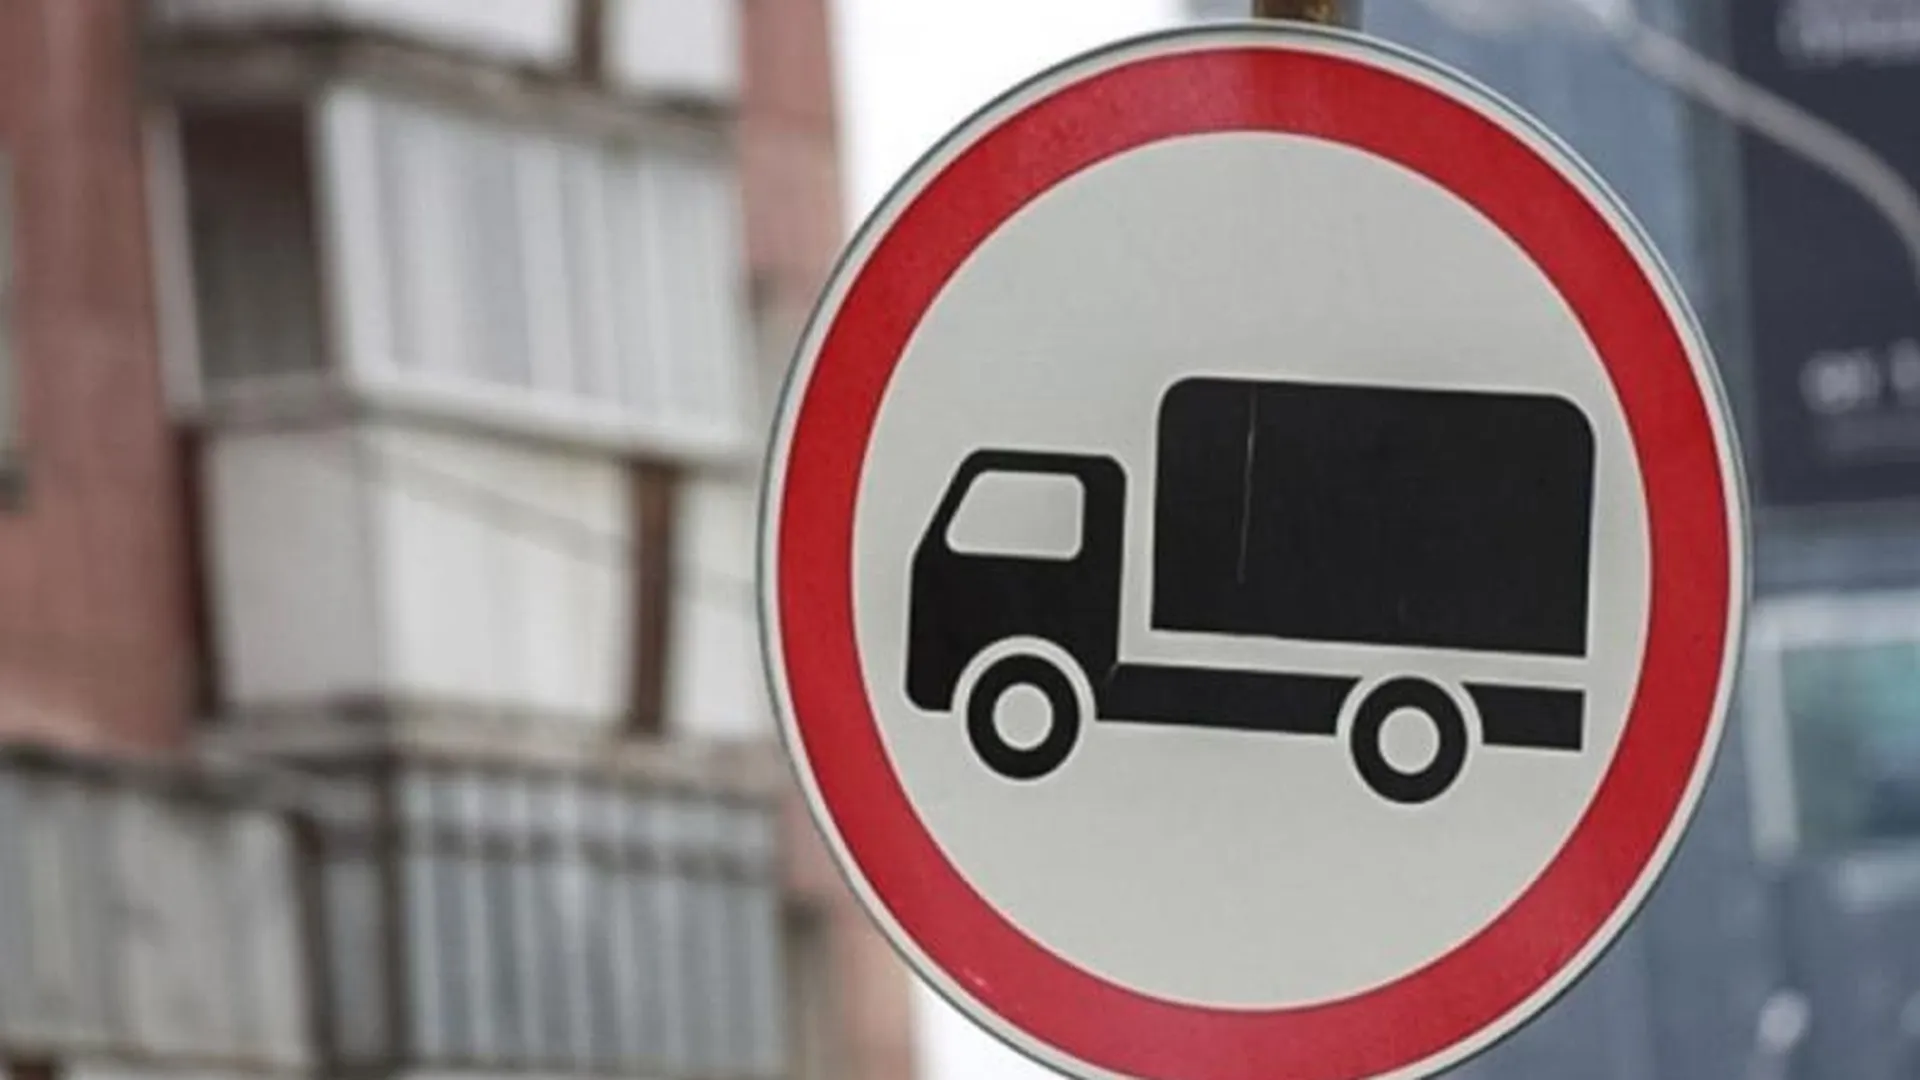 Ограничения движения грузовиков. Ограничение движения транспорта. Знаки ограничения для грузовиков. Грузовым машинам въезд запрещен. Запрет движения грузовых автомобилей.